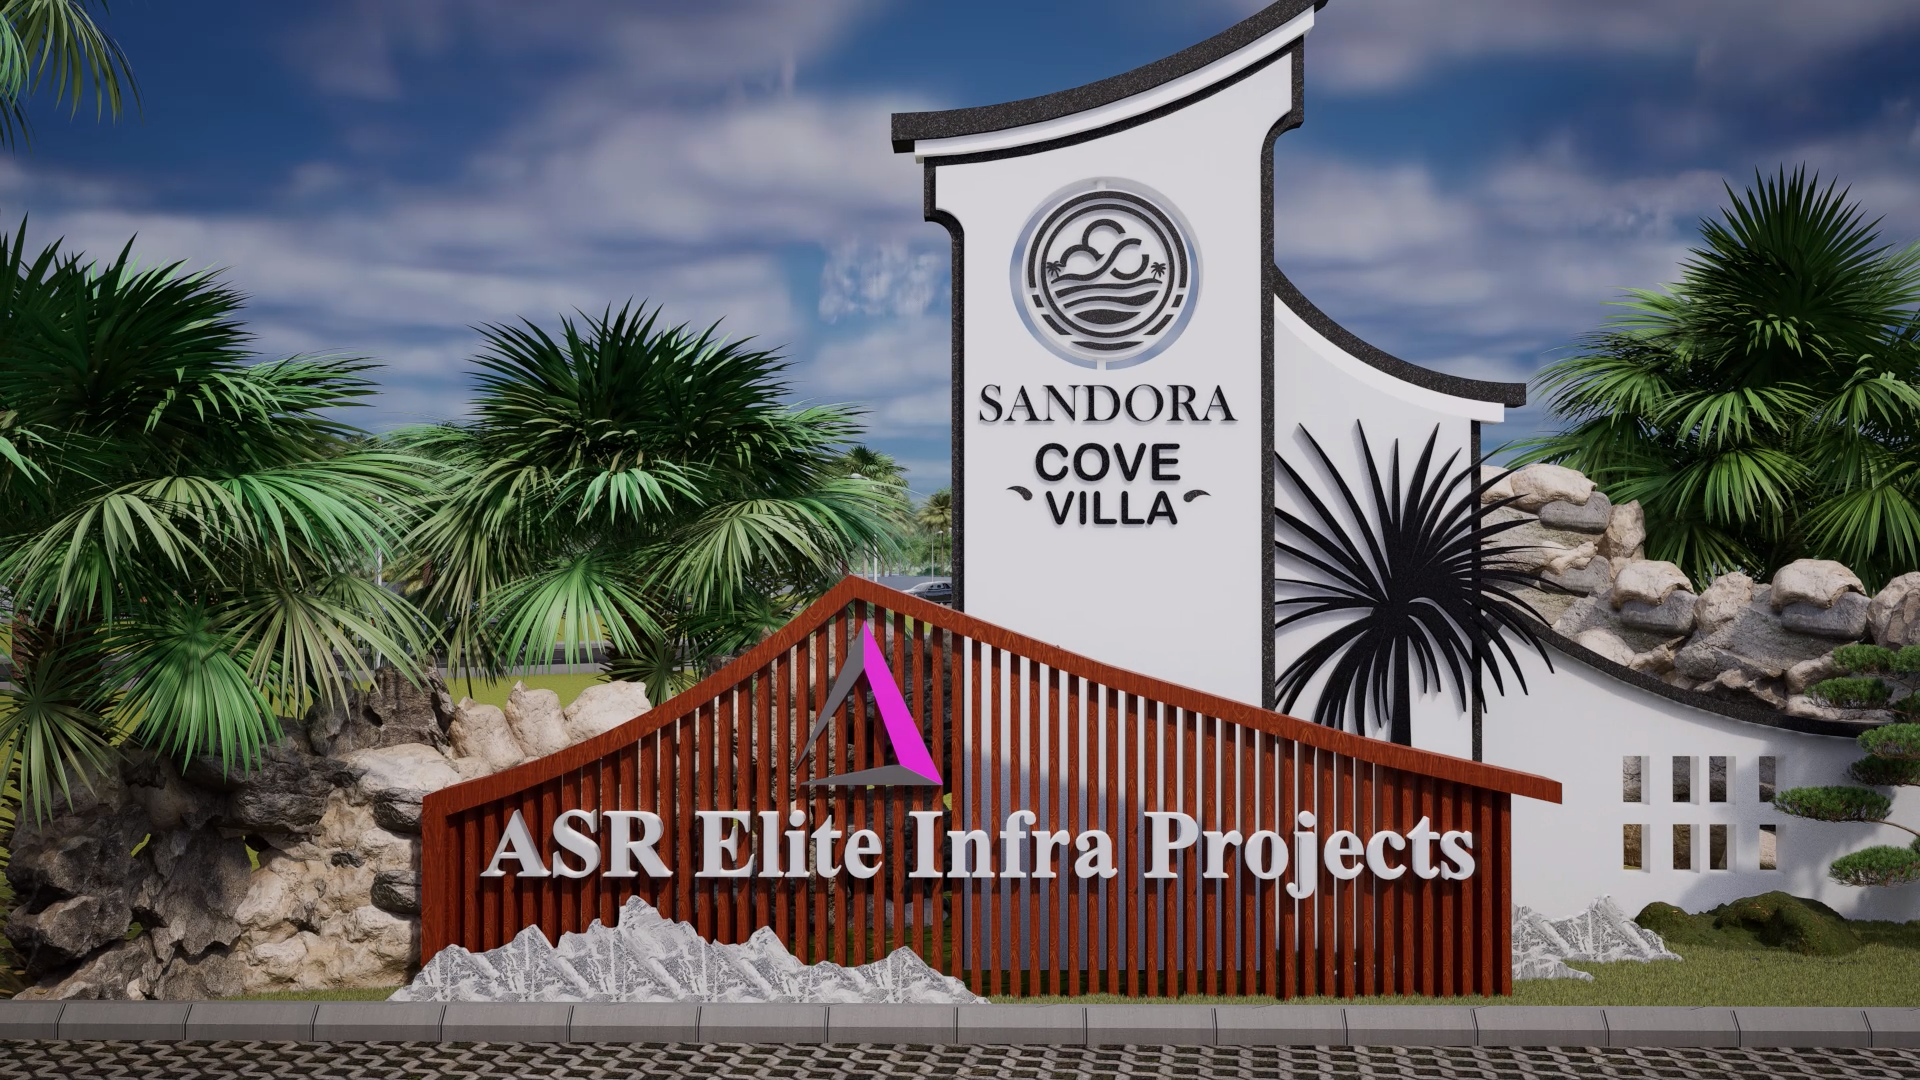 ASR Elite Infra Projects - Sandora Cove Villa